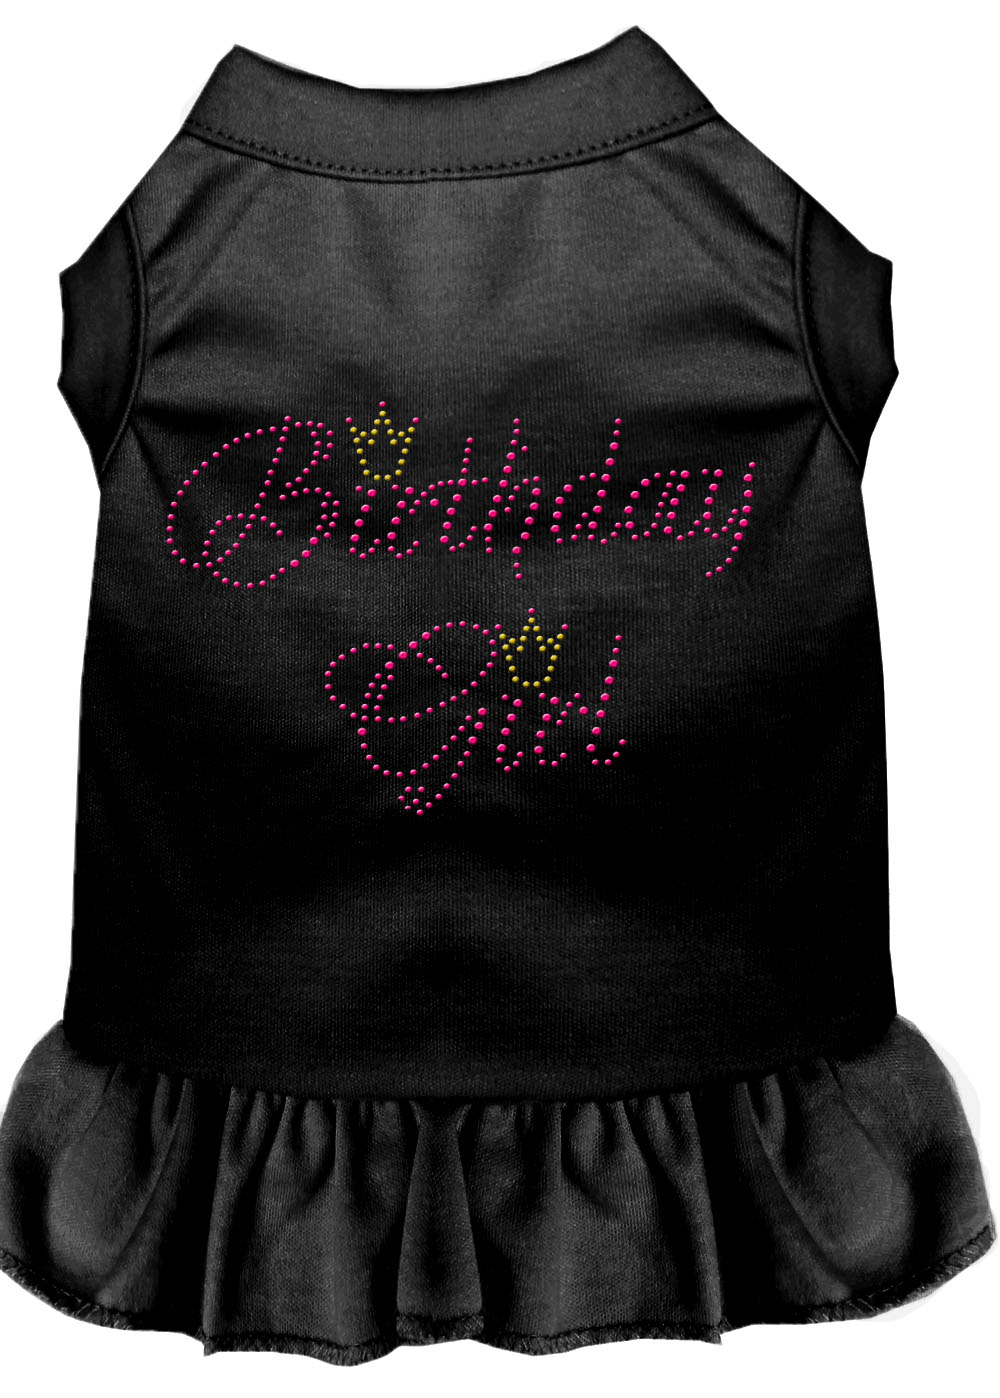 Birthday Girl Rhinestone Dress Black Med